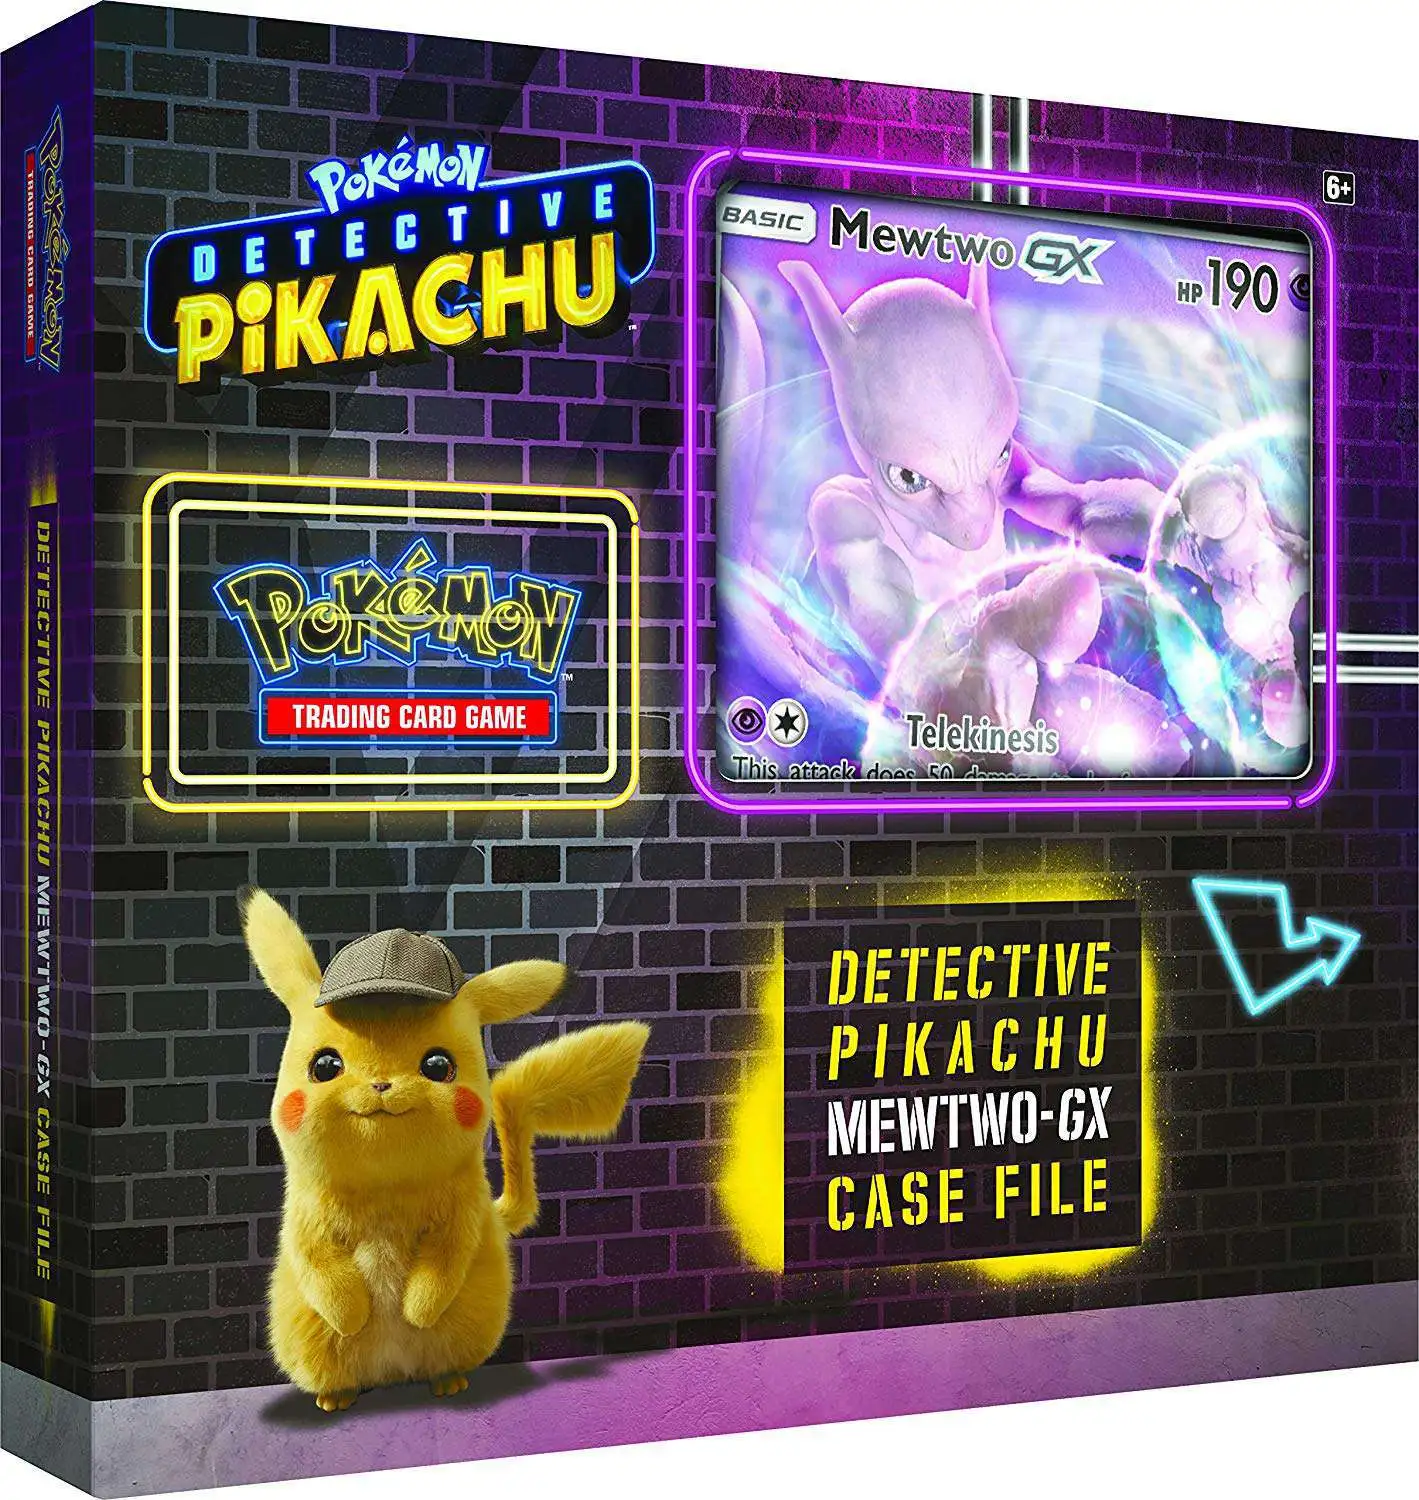 PTCGO 2x Mewtwo-GX Detective Pikachu Case File Code Cards PICS Pokemon Online 